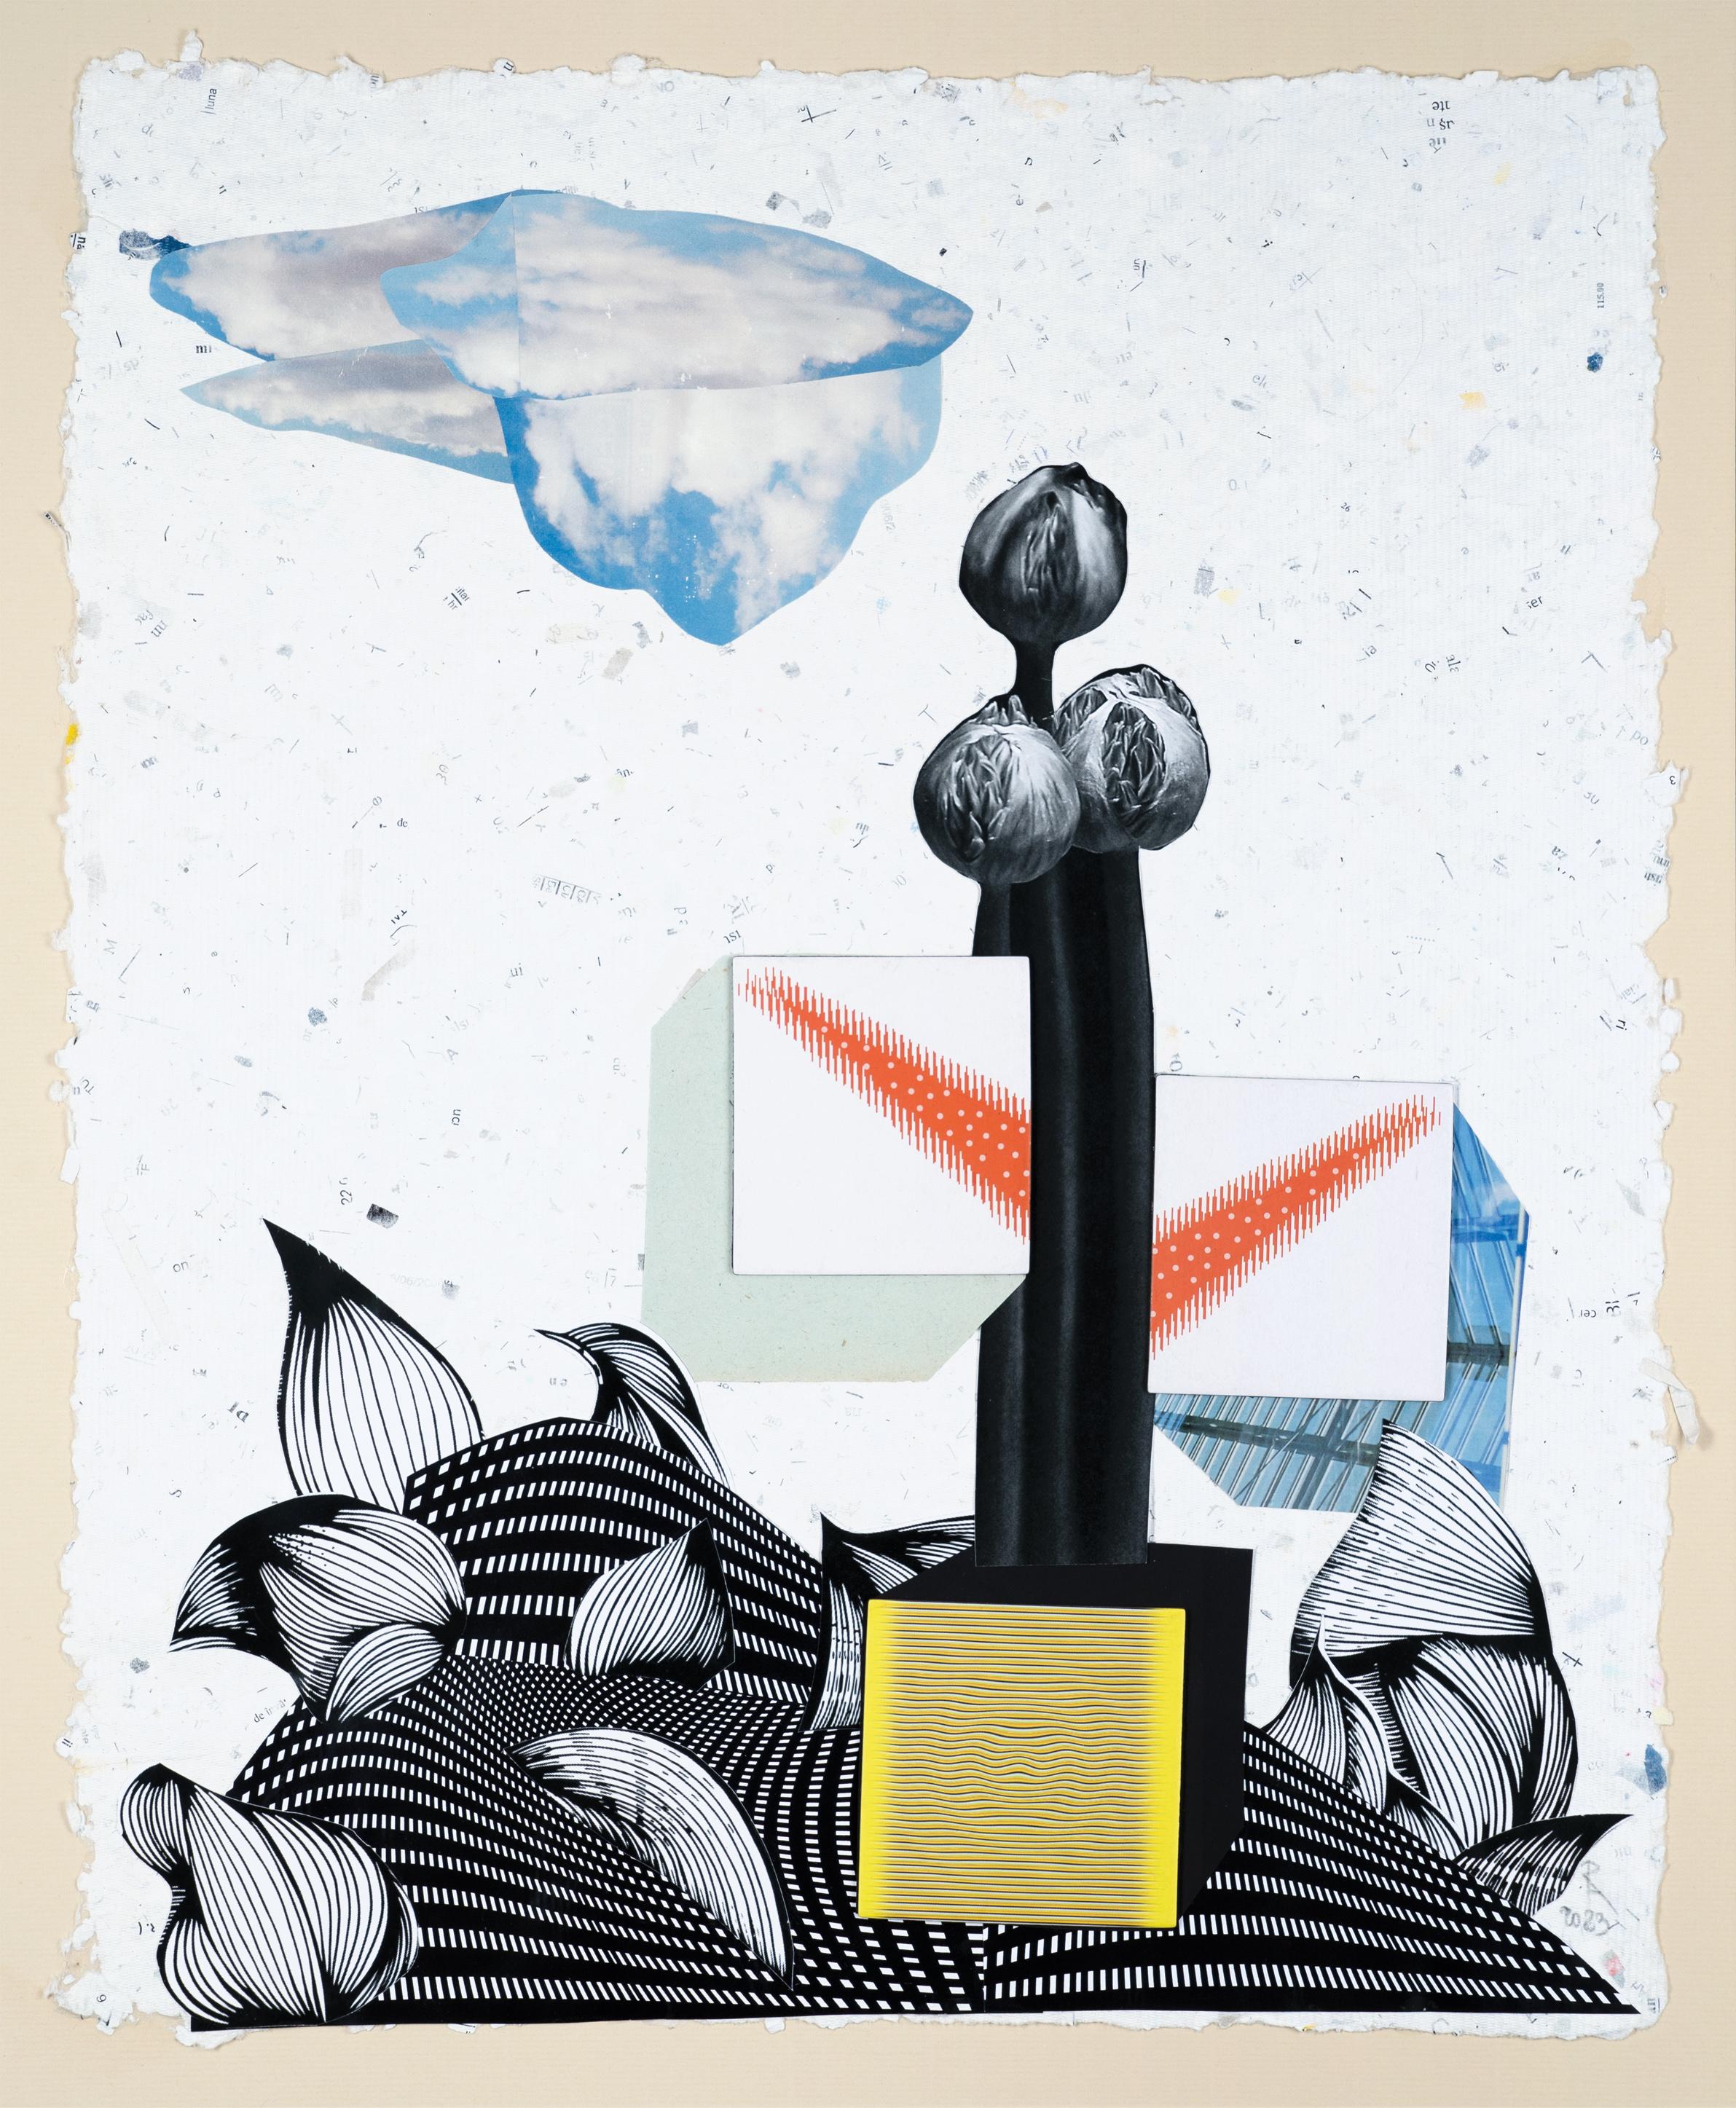 The Flower - Paper, Landscape, Collage, 21st Century, Surrealism